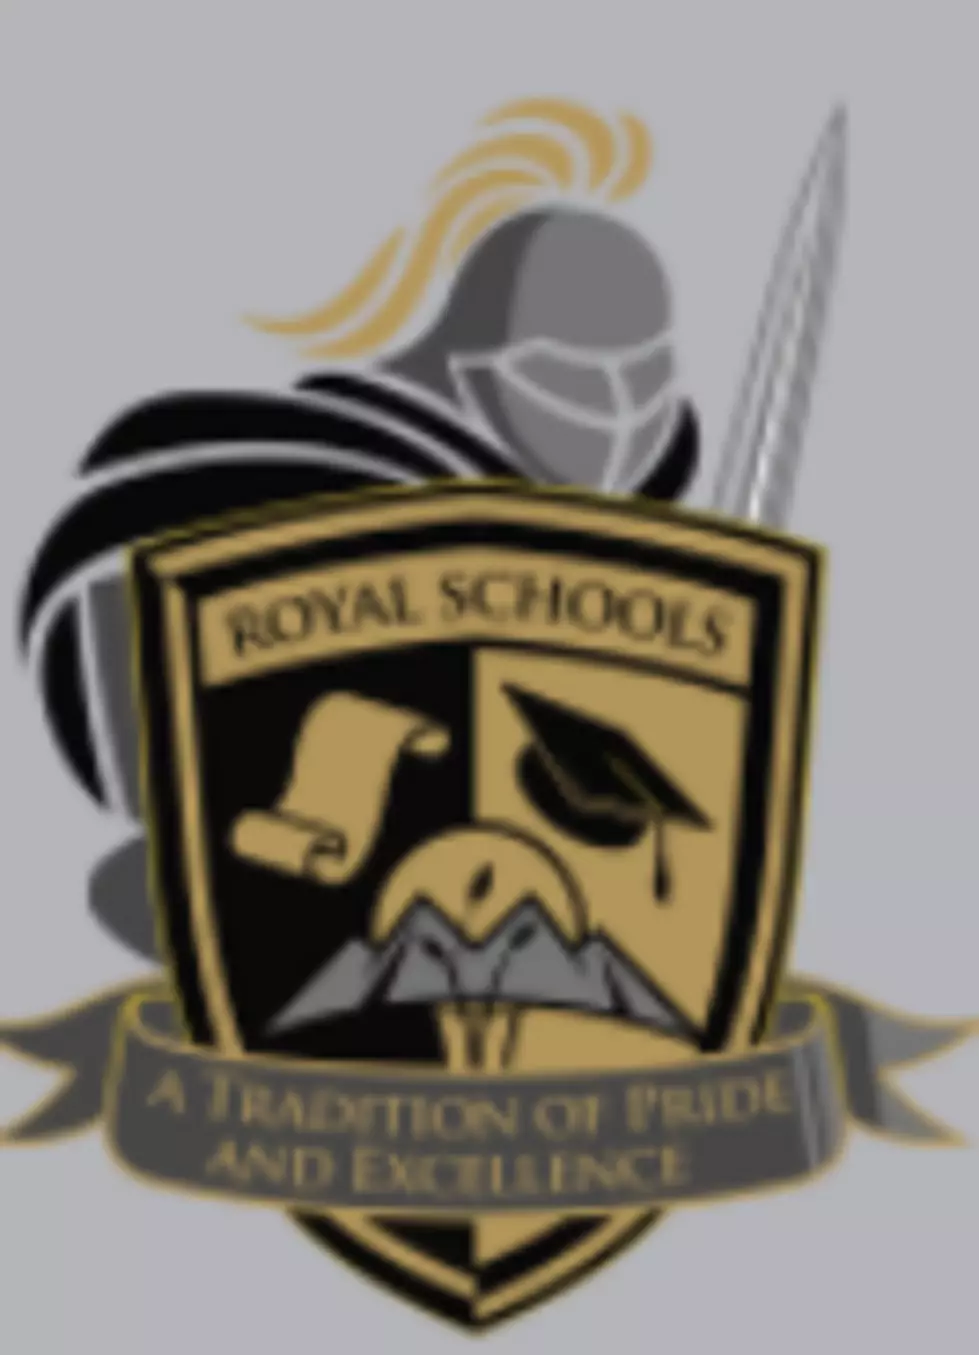 High School in Royal City Warns About Fake Social Media Accounts